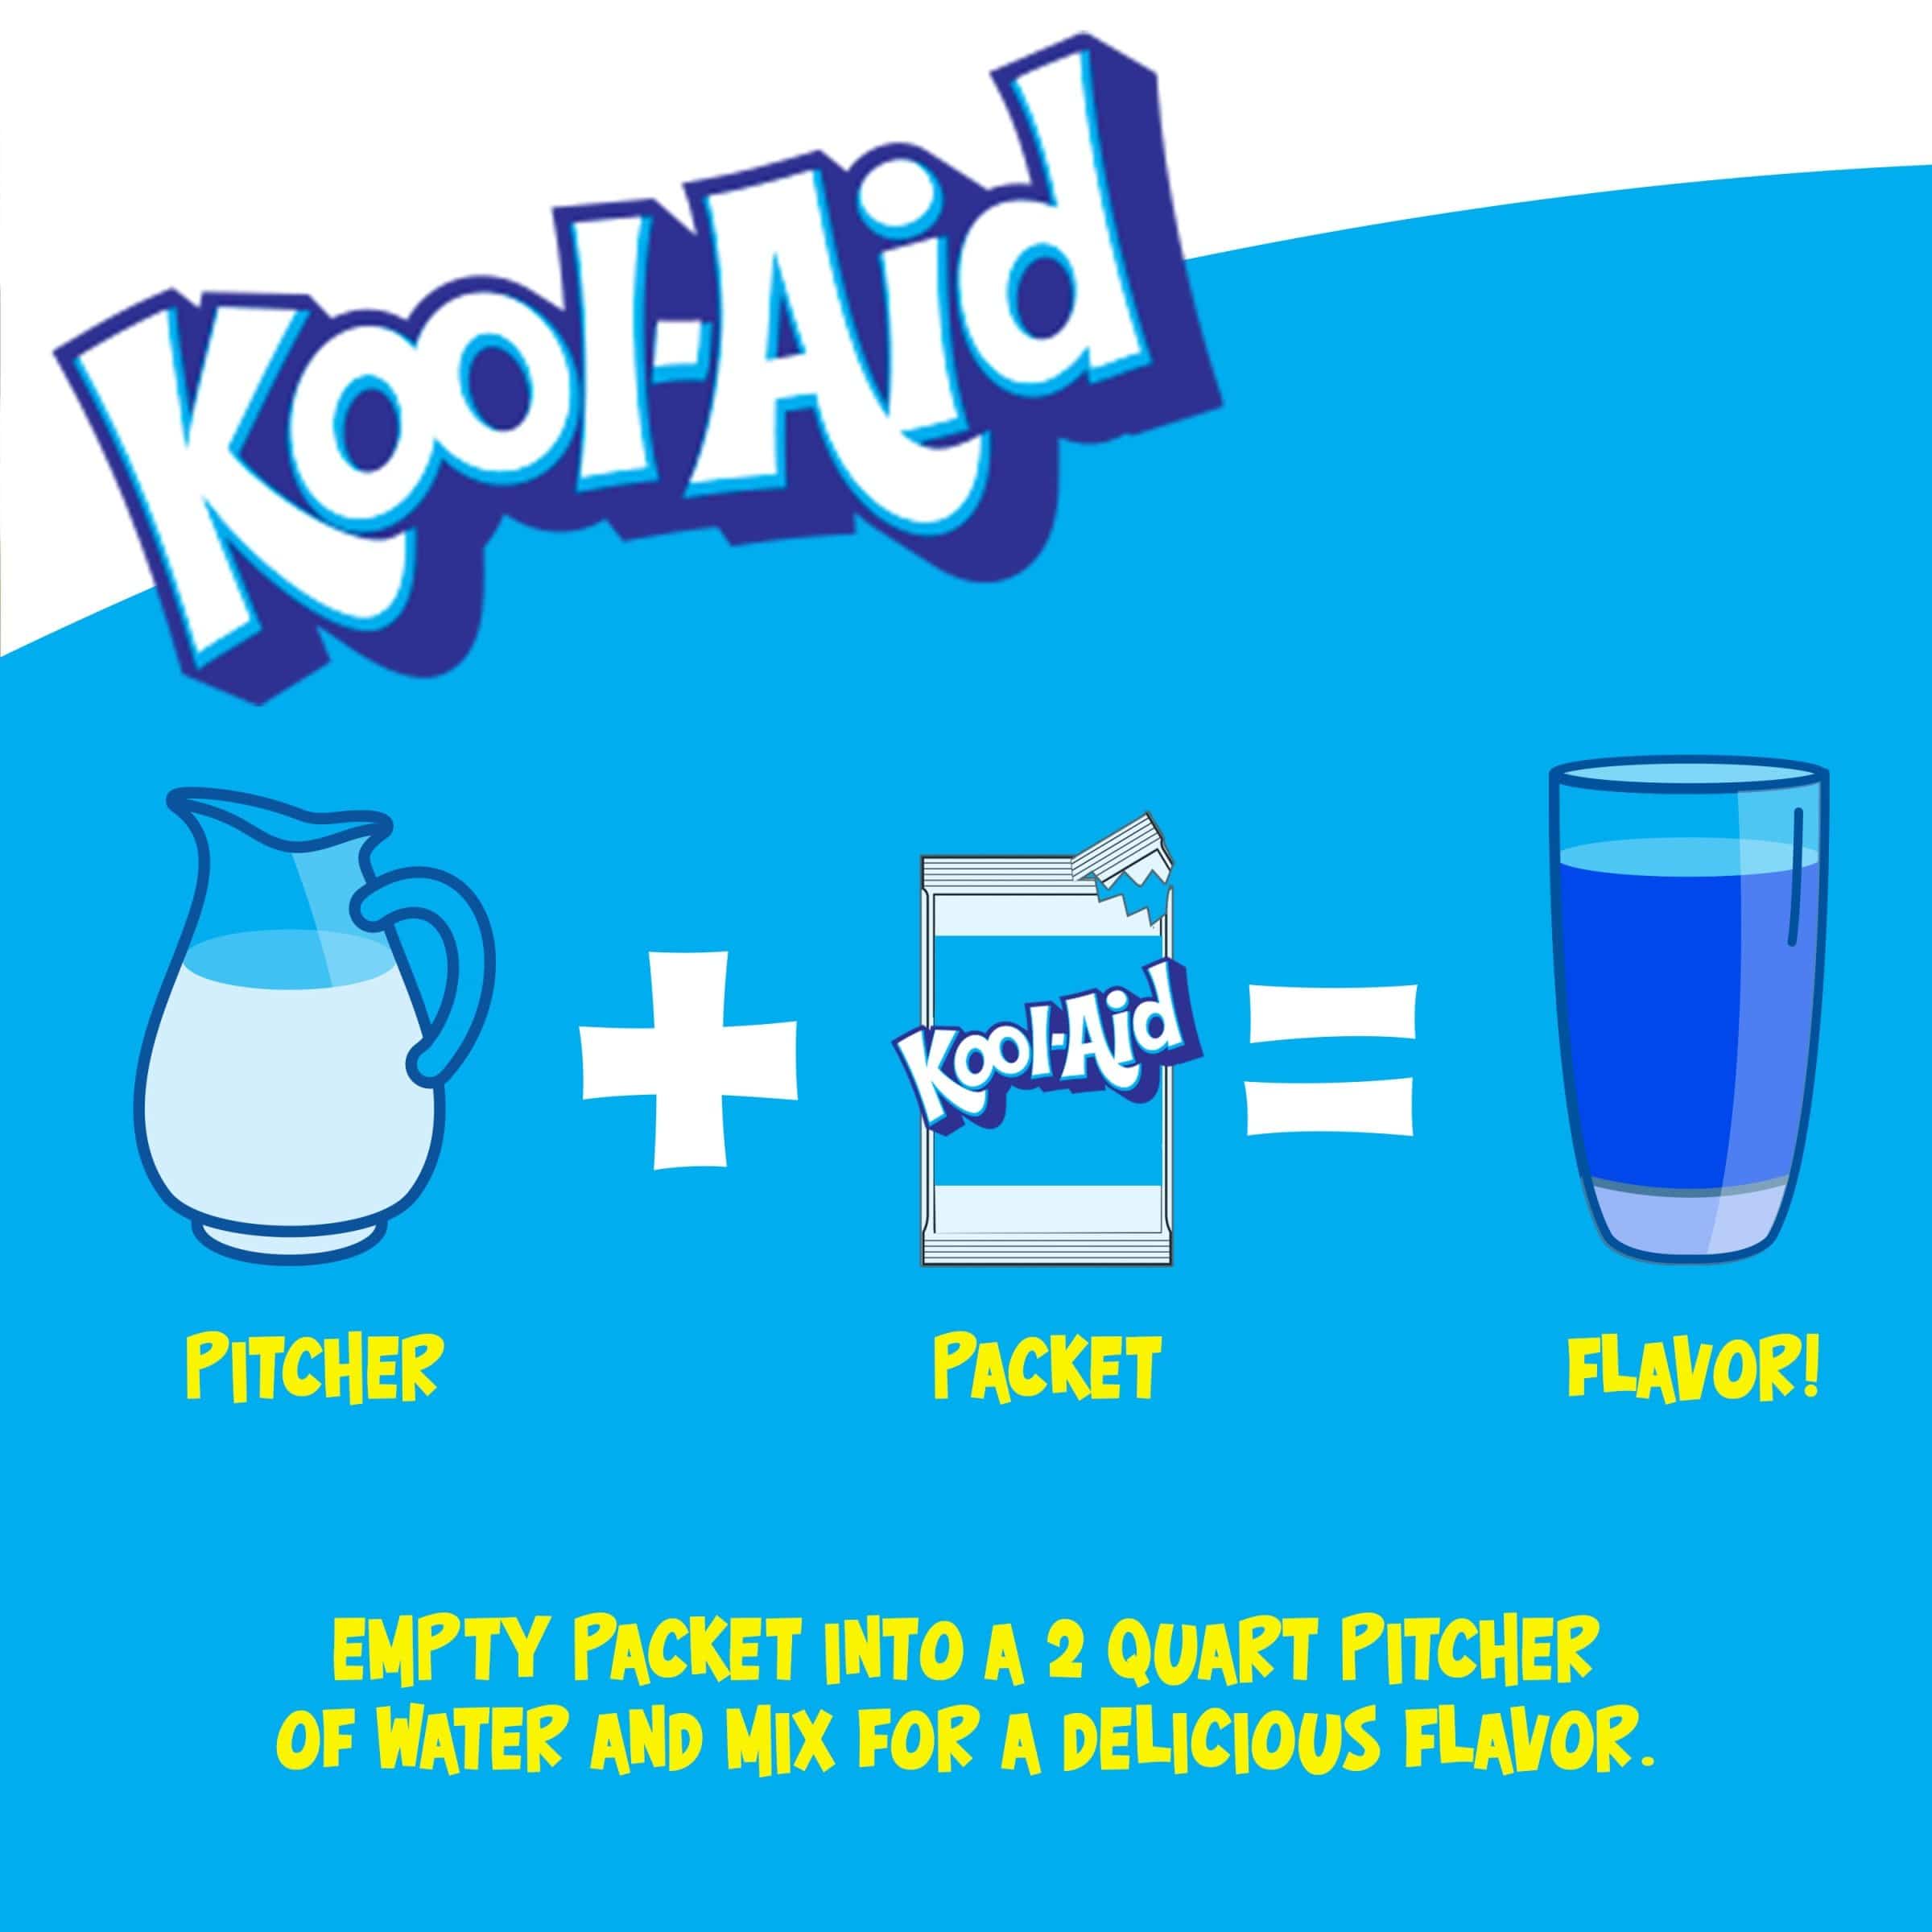 Kool Aid Blue Raspberry Lemonade (6 Sachets) - My American Shop